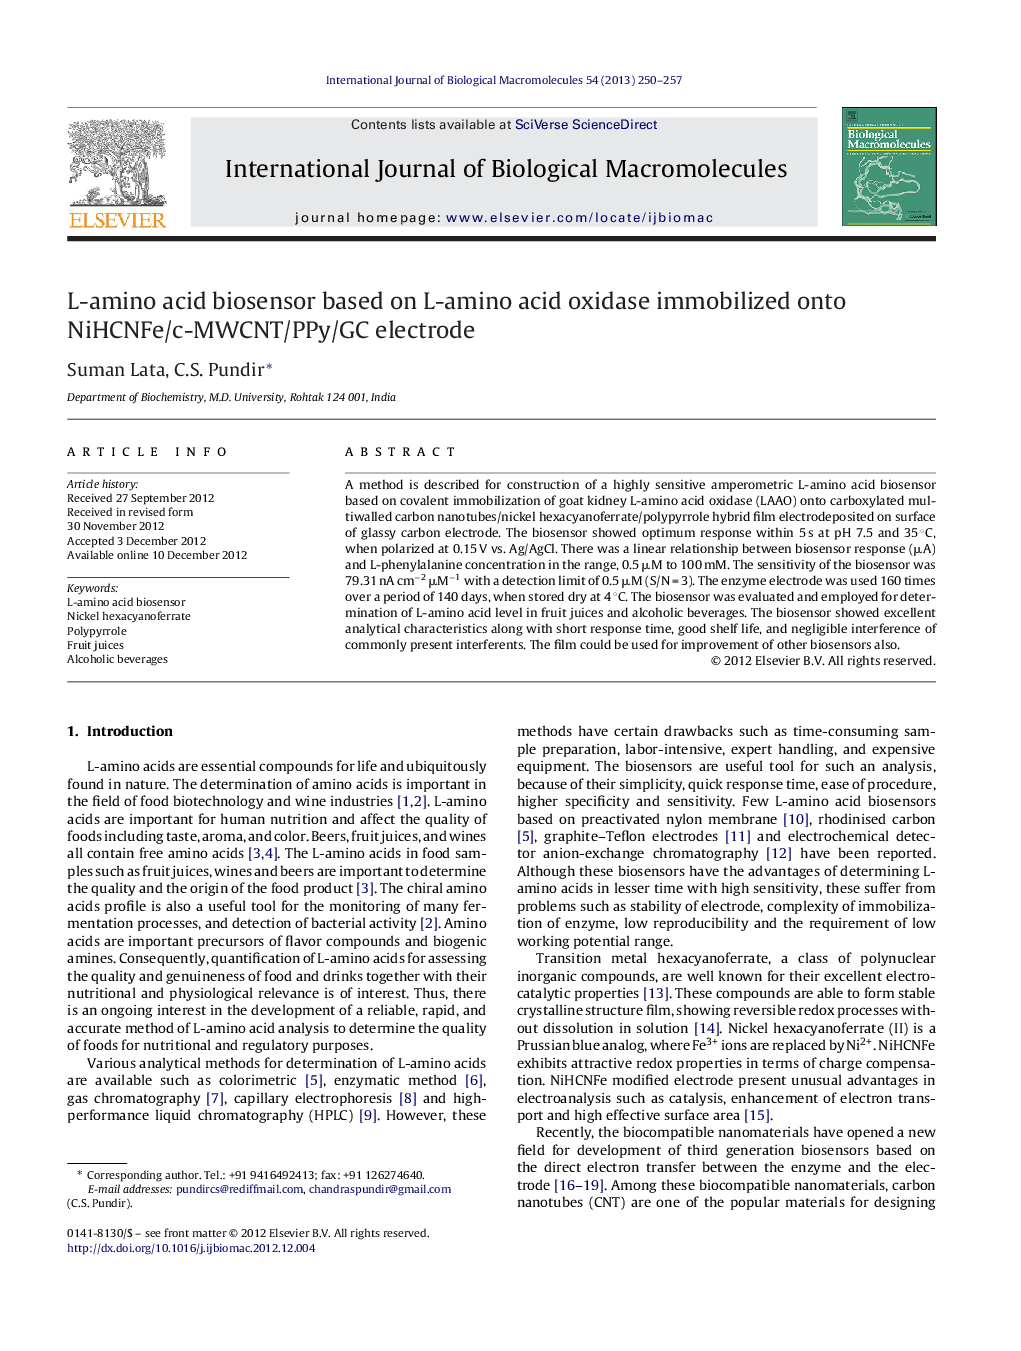 L-amino acid biosensor based on L-amino acid oxidase immobilized onto NiHCNFe/c-MWCNT/PPy/GC electrode